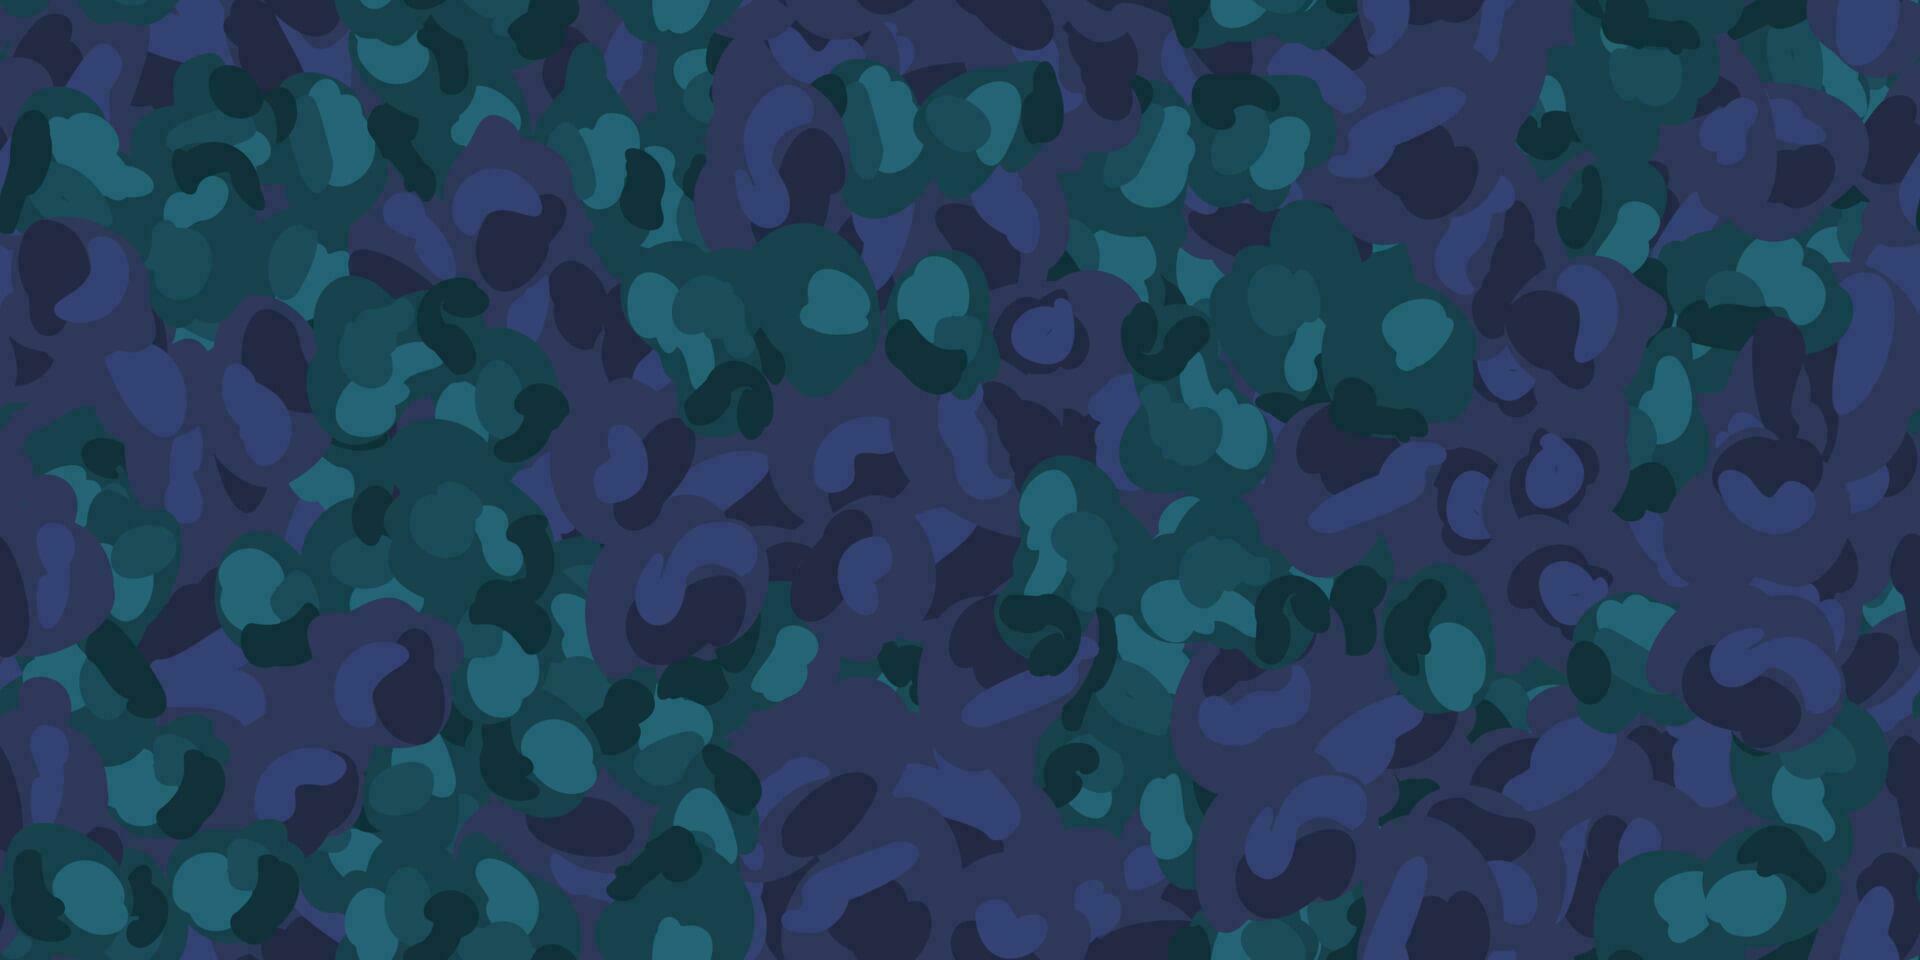 leopard mönster design, vektor illustration bakgrund. djur- design. sömlös leopard mönster på blå, grön, mynta, svart